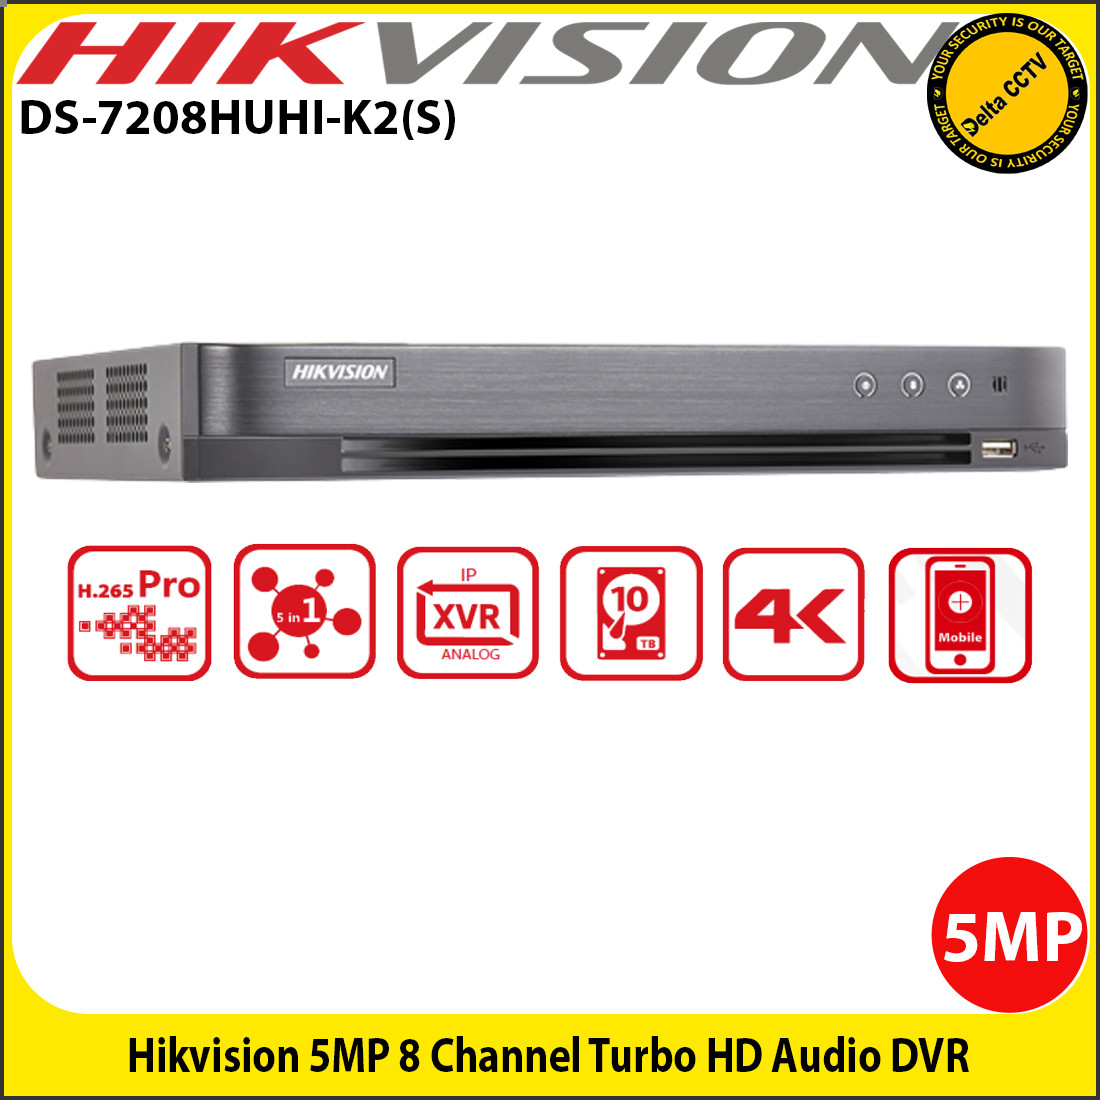 Hikvision Ds 78huhi K2 S 5mp Turbo Hd 8 Channel Audio Dvr H 265 Video Compression Hdtvi Ahd Cvi Cvbs Ip Video Input